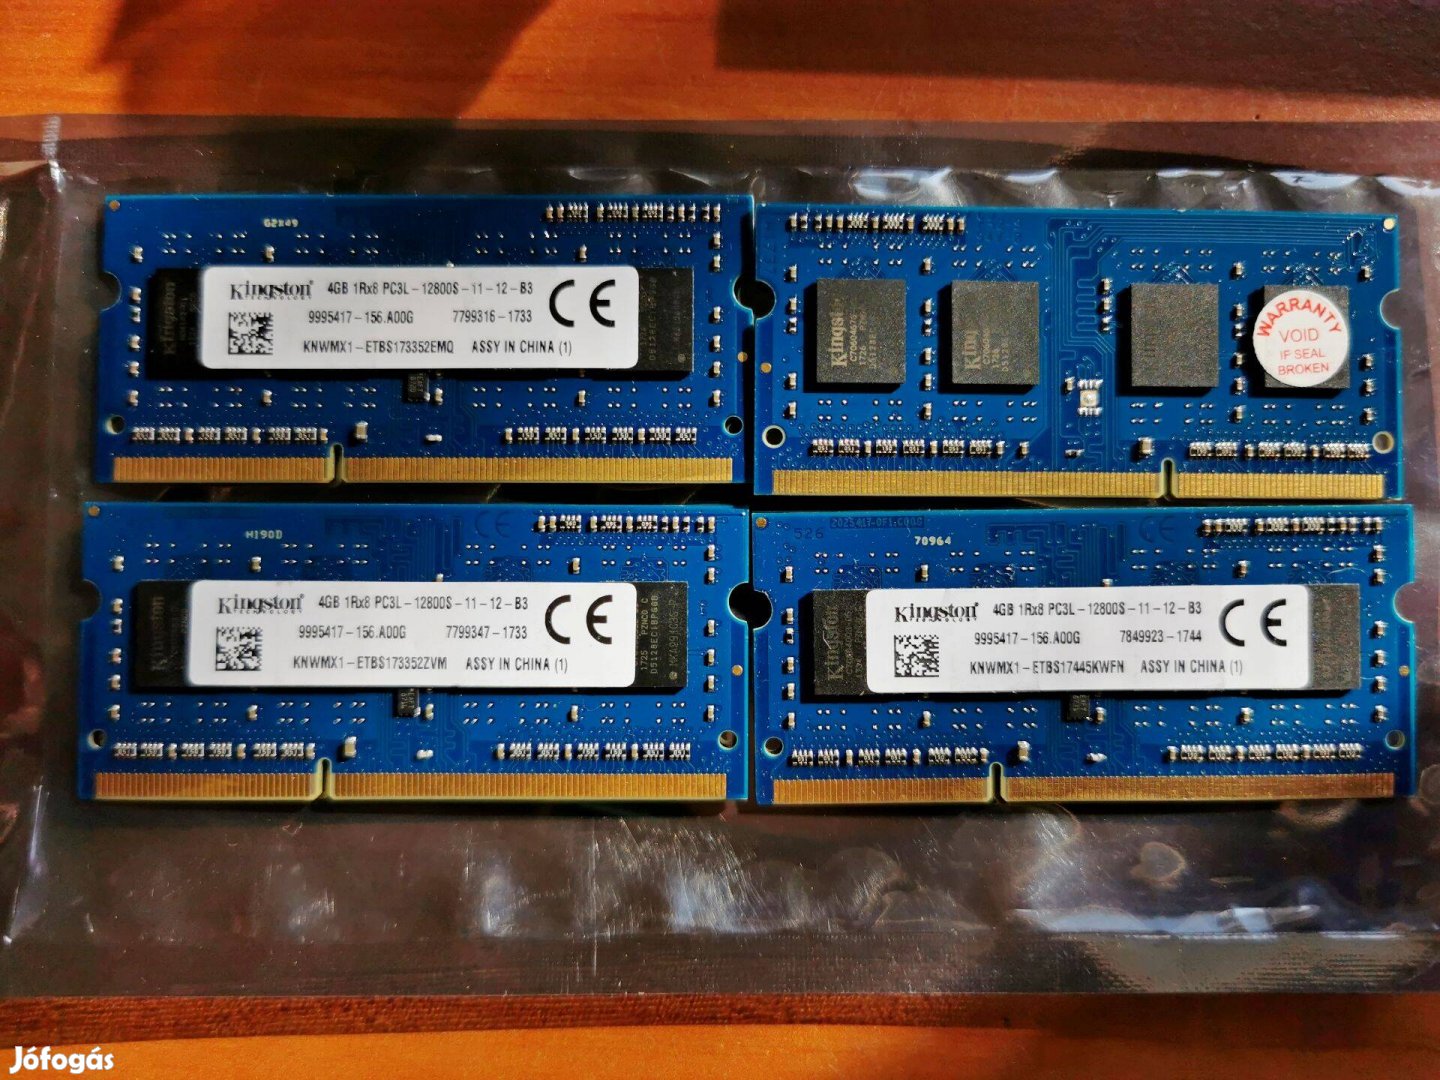 06/3 Kingston Knwmx1-ETB 16GB 3 hónap garancia PC3L DDR3 ram memória